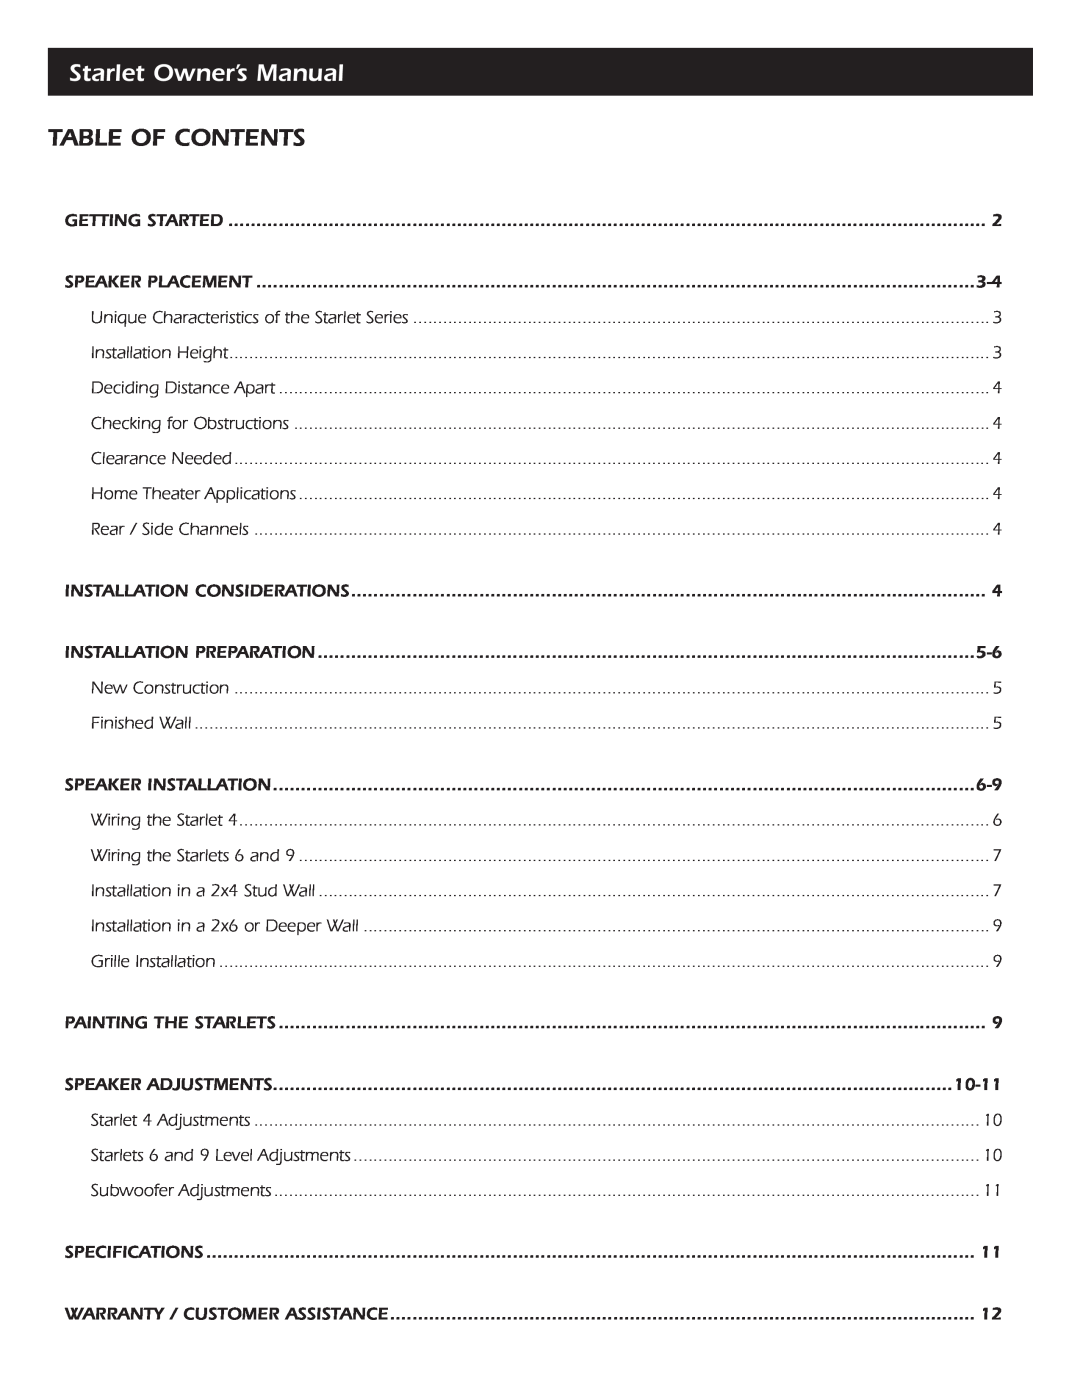 SpeakerCraft Starlet 4, Starlet 9, Starlet 6 owner manual Table Of Contents 